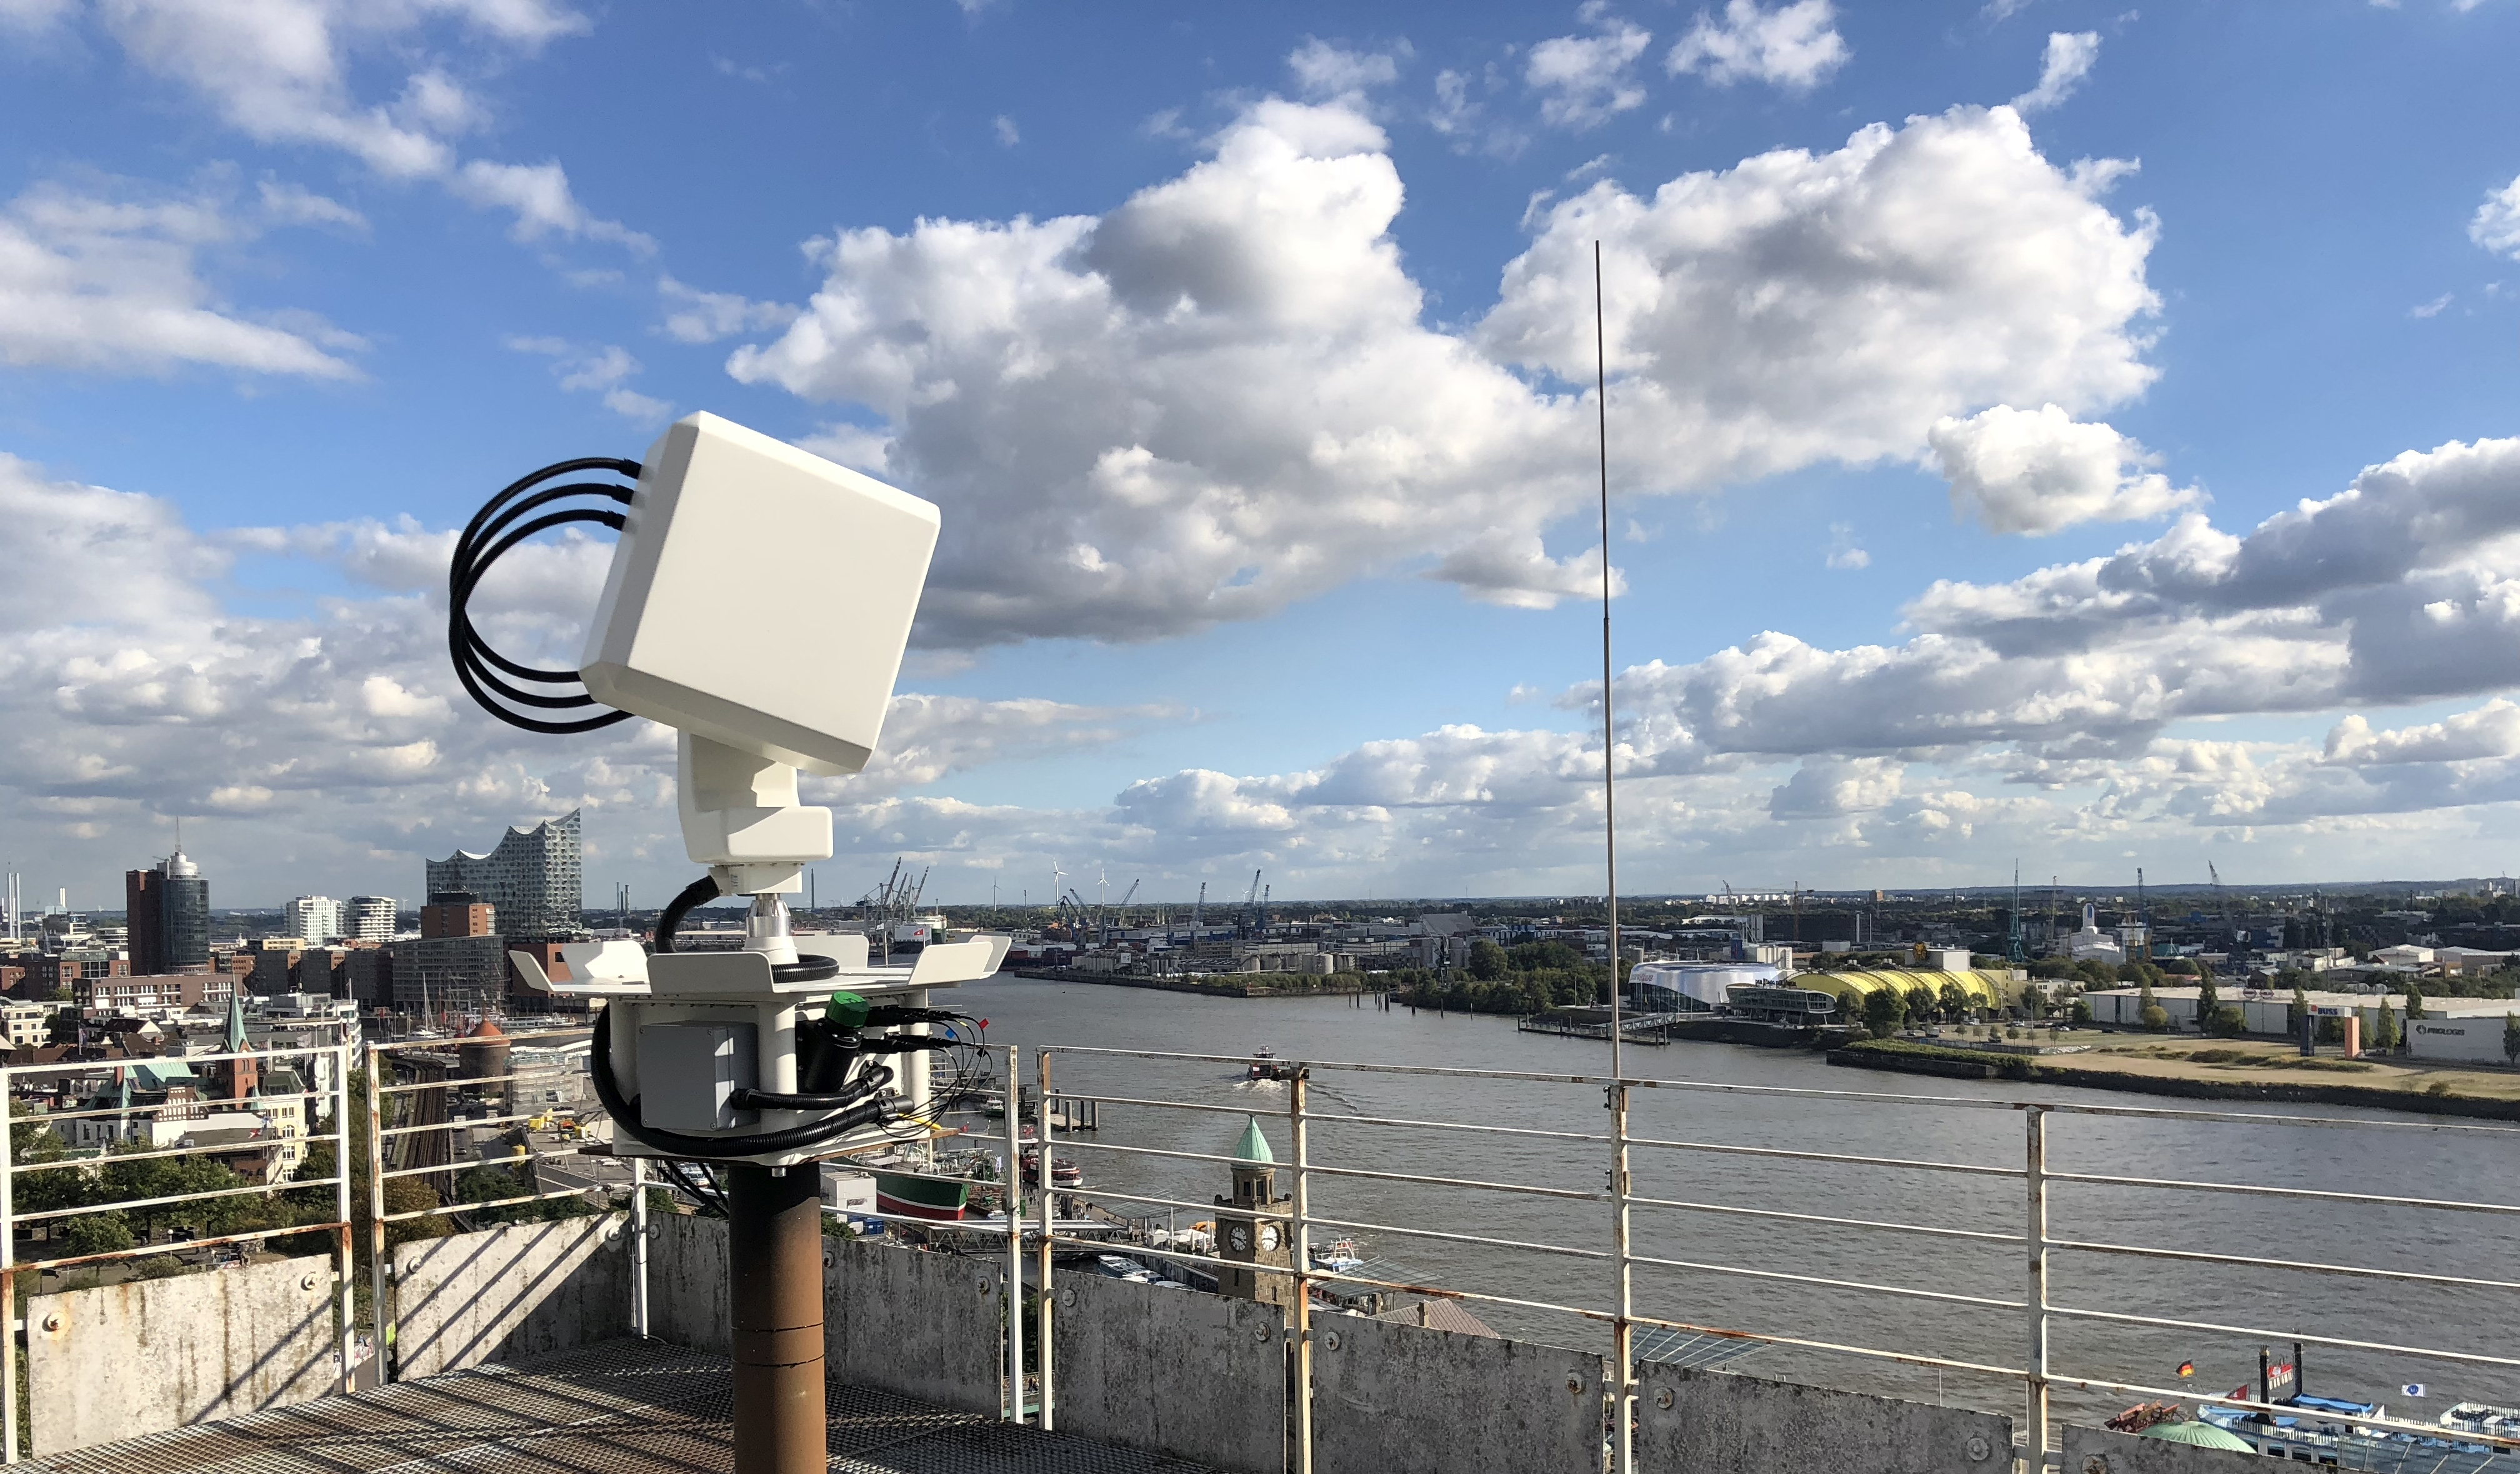 Modar system for the analysis of maritime traffic in Hamburg